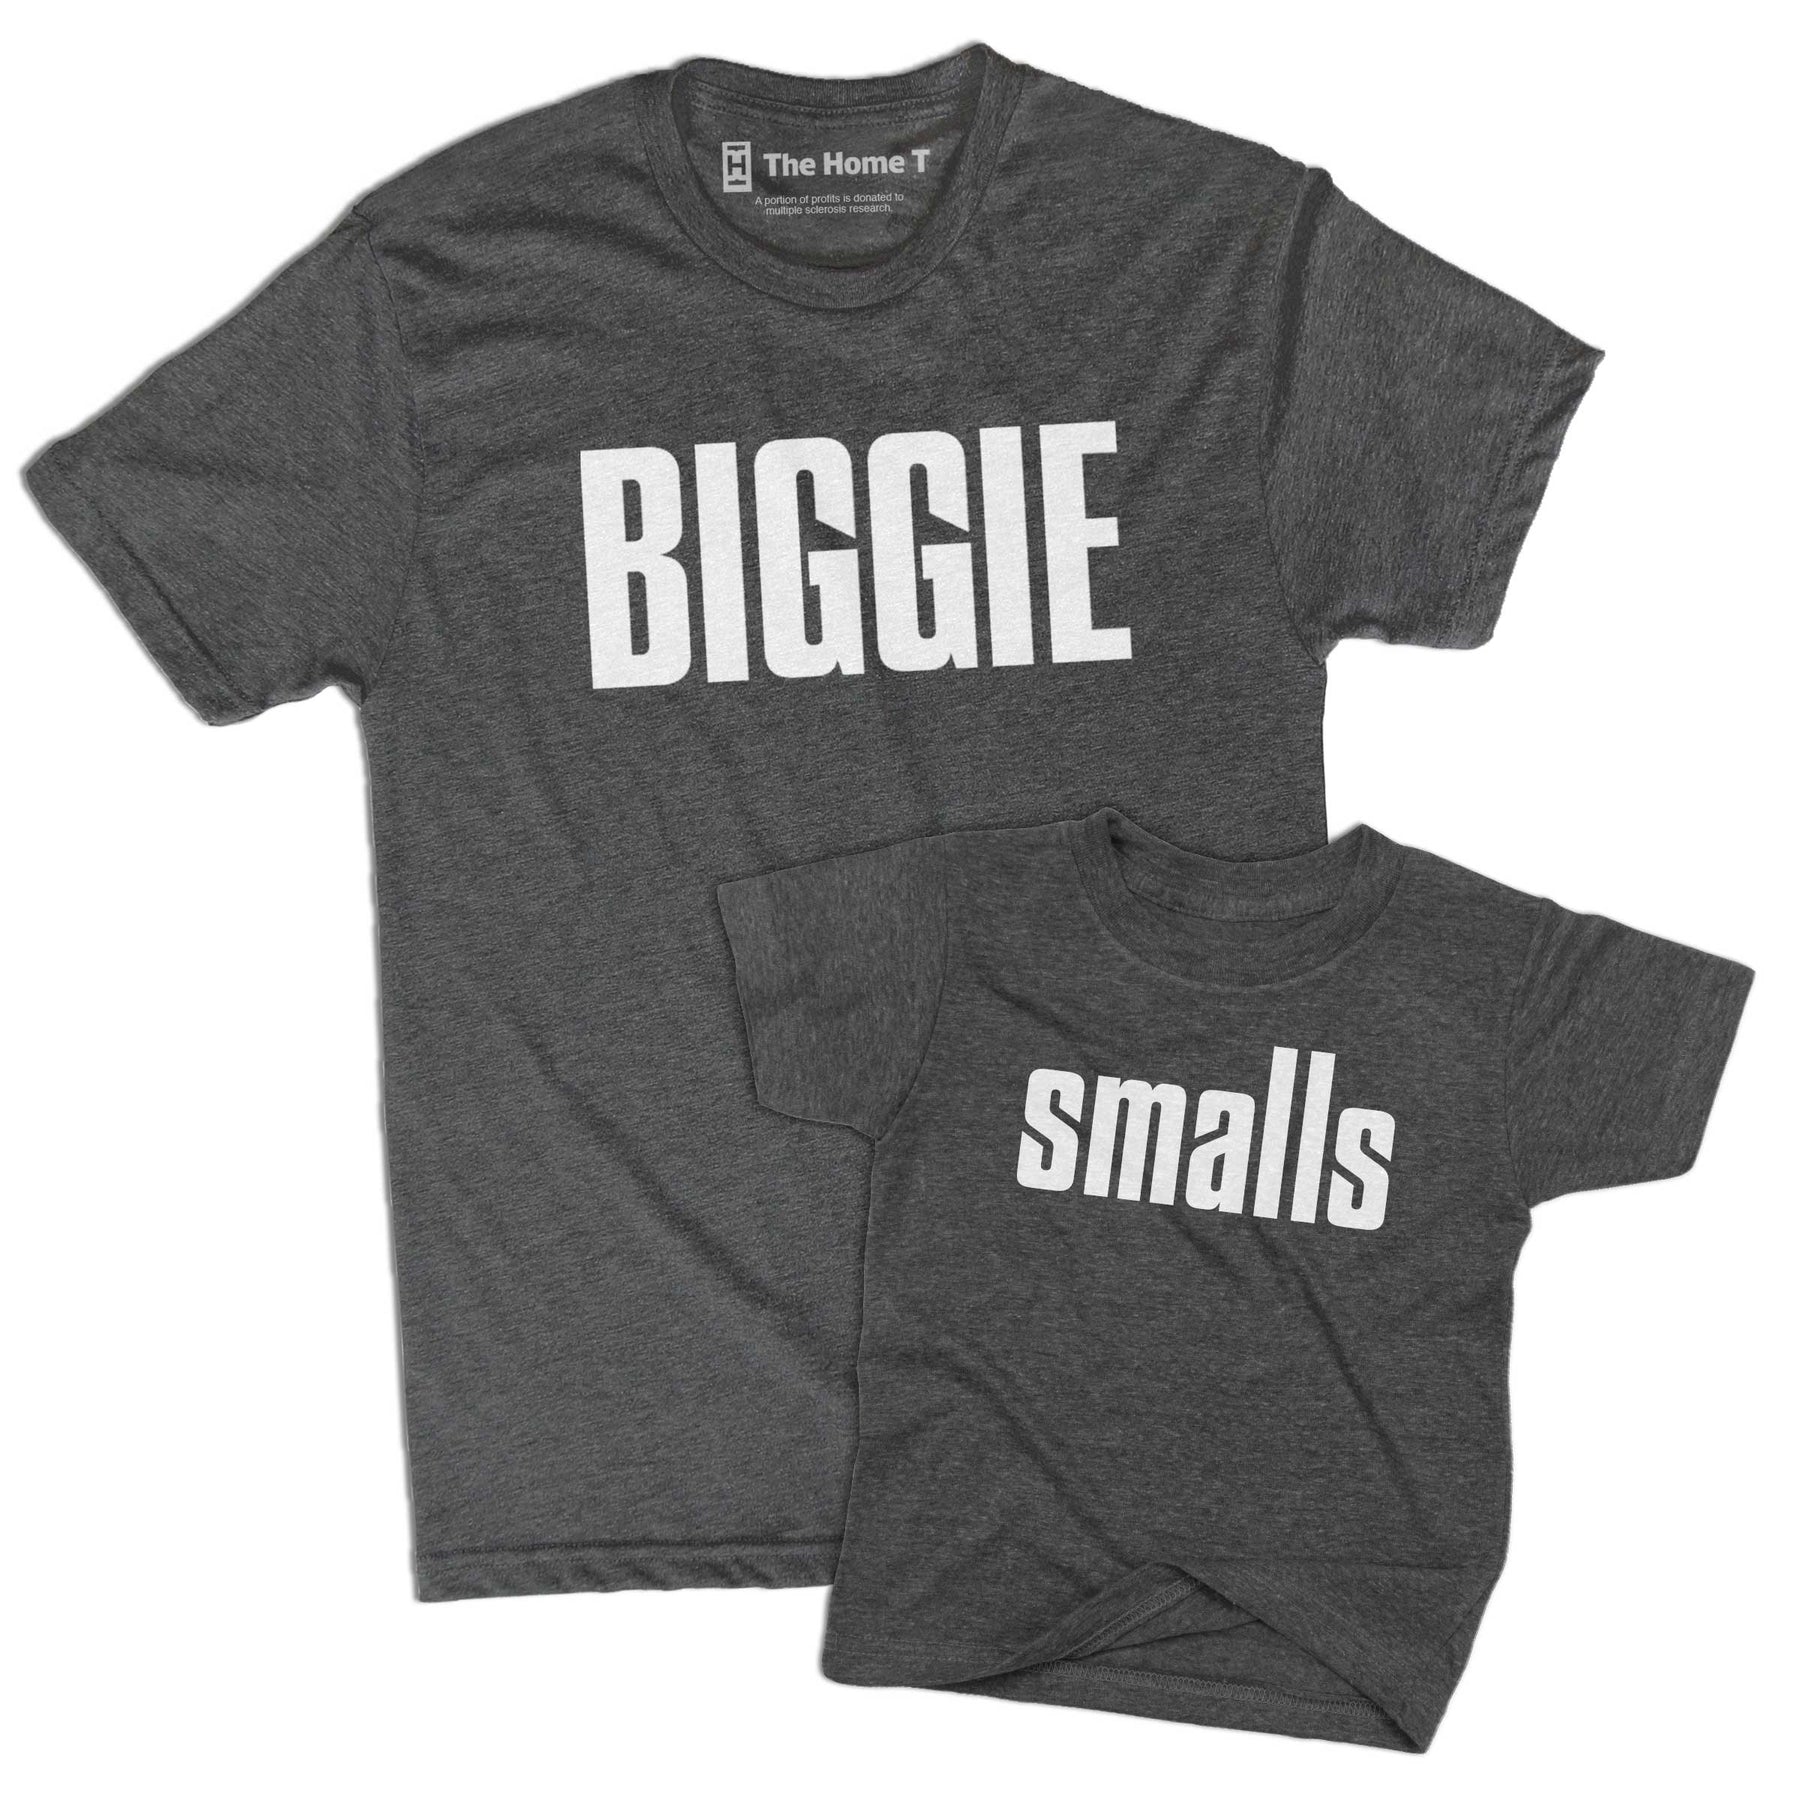 Biggie Smalls Matching Shirt Set